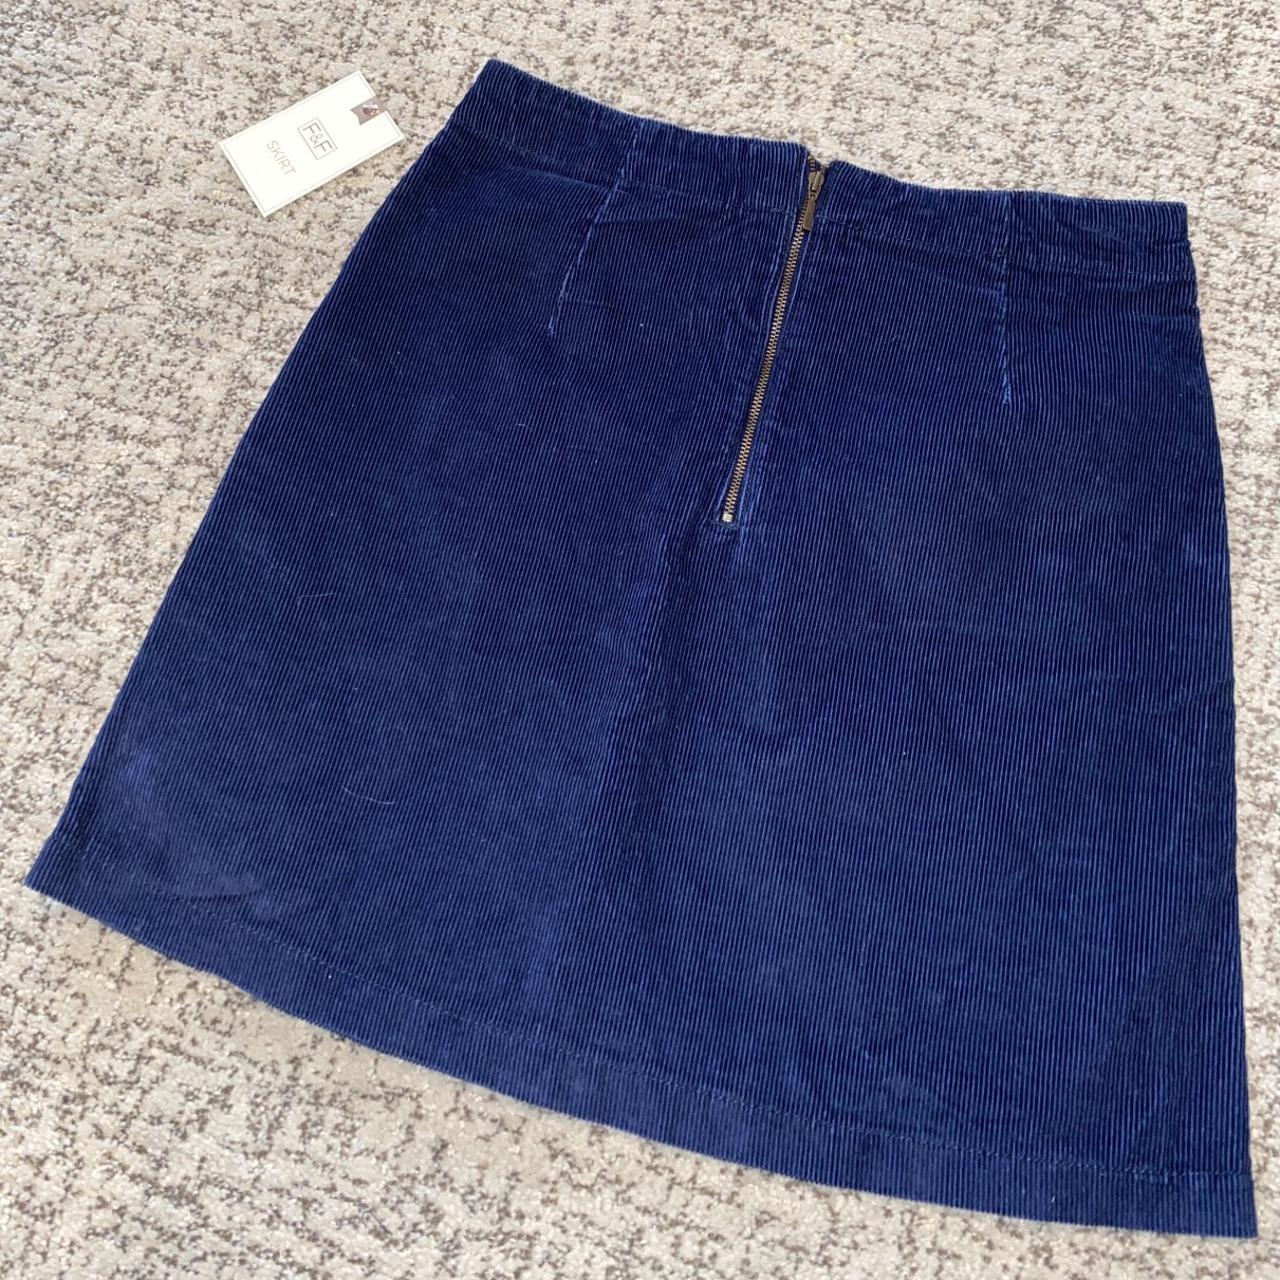 Product Image 3 - F&F. Short corduroy skirt. Pockets.